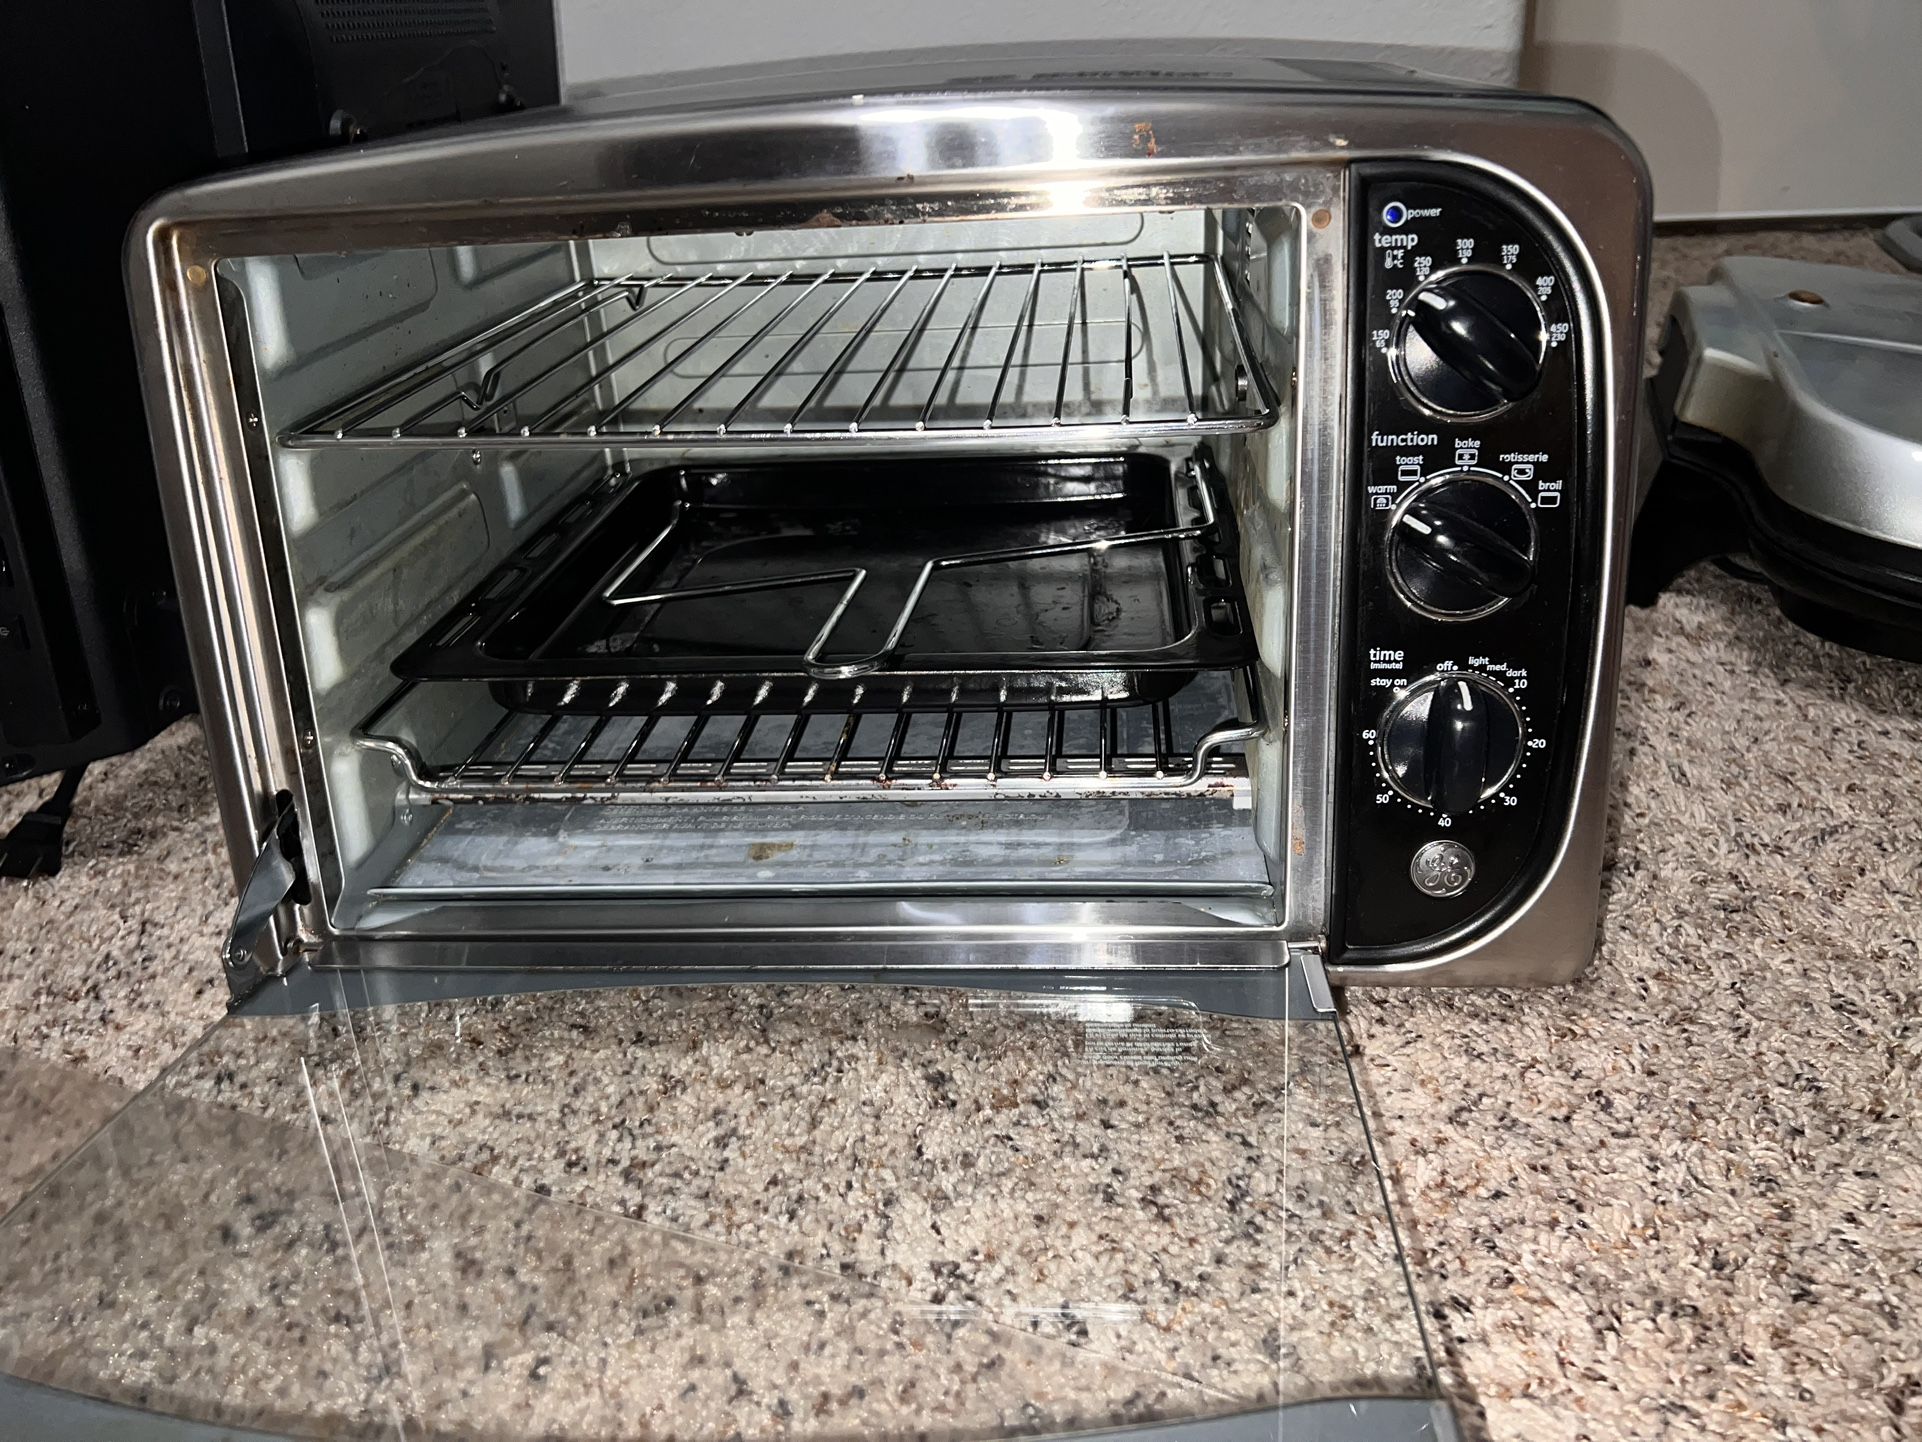 Black & Decker Toast R Oven for Sale in El Paso, TX - OfferUp